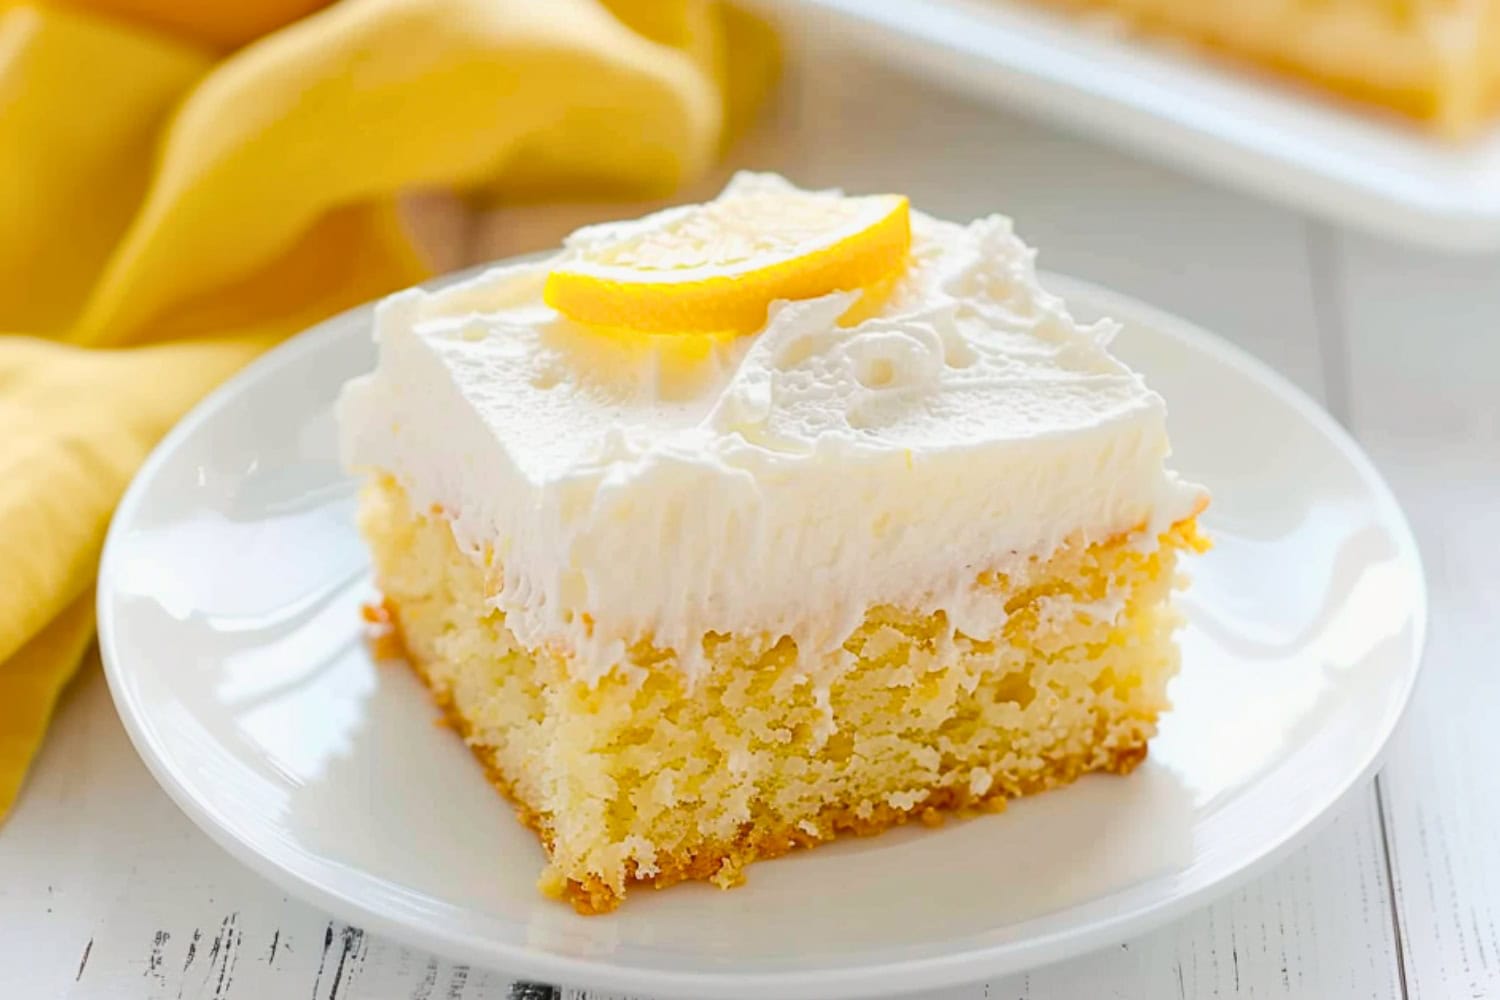 Slice of moist lemon crazy cake on a white plate garnished with lemon slice.